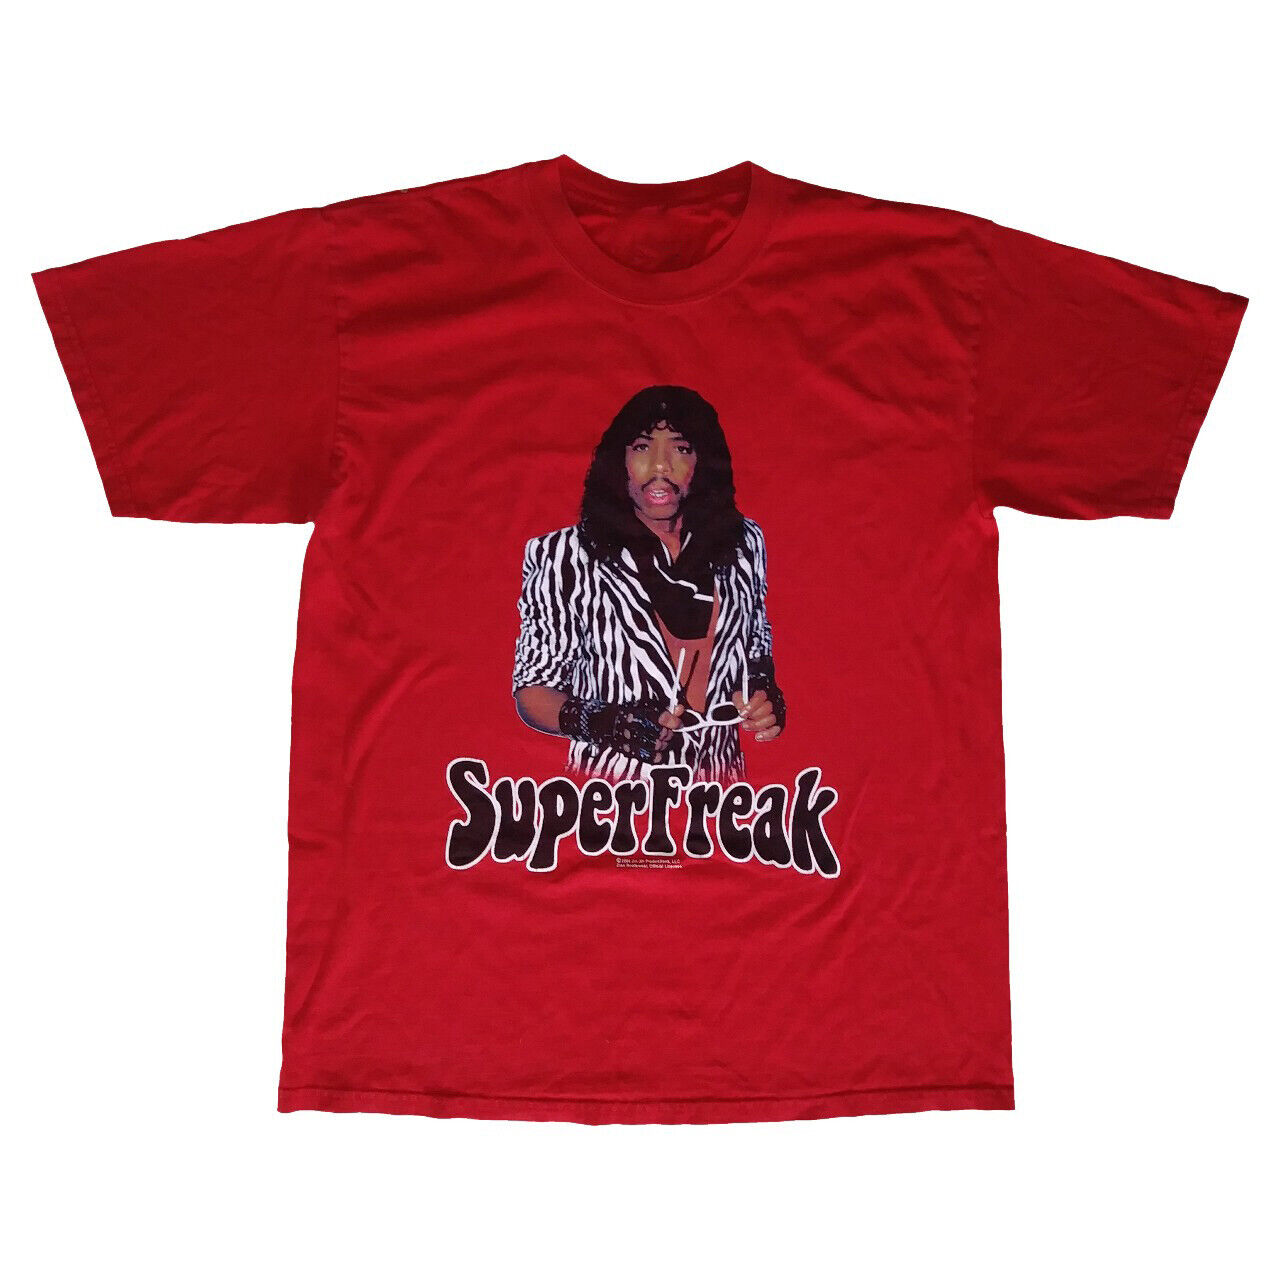 Vintage Super Freak Rick James T-Shirt Short Sleeve Red Unisex S-234XL CC1307